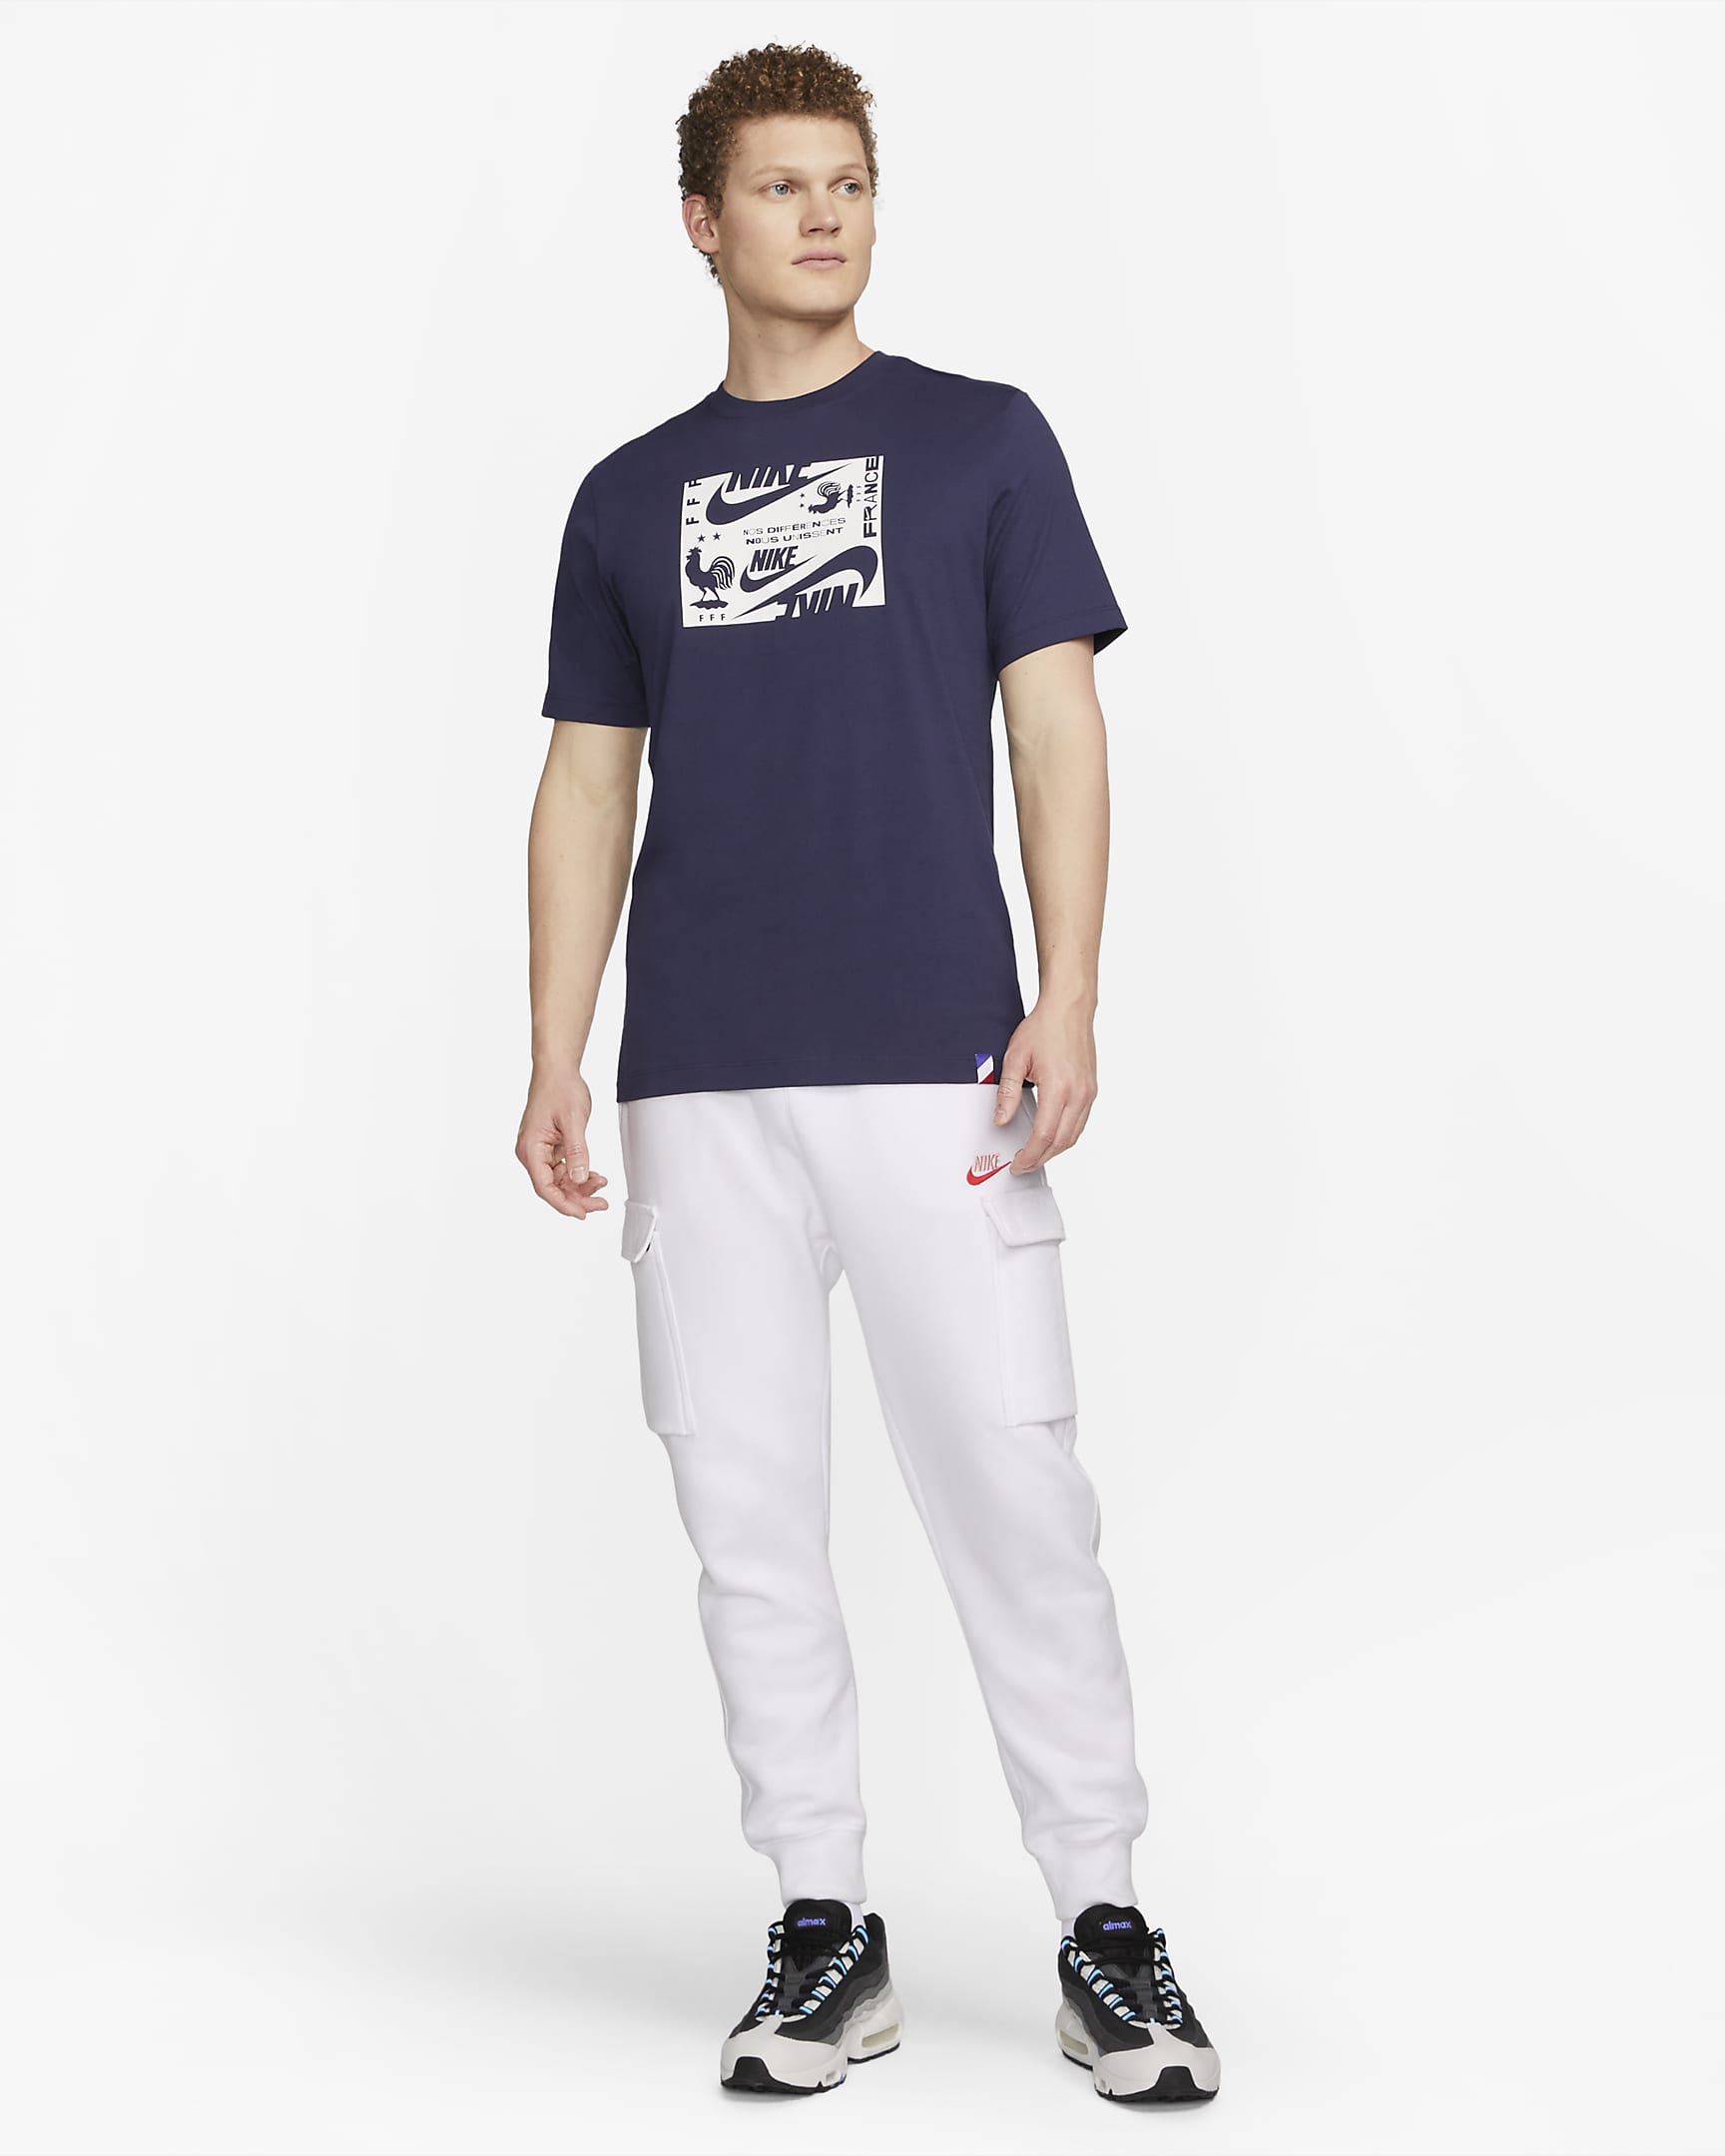 France Men's Graphic T-Shirt. Nike.com